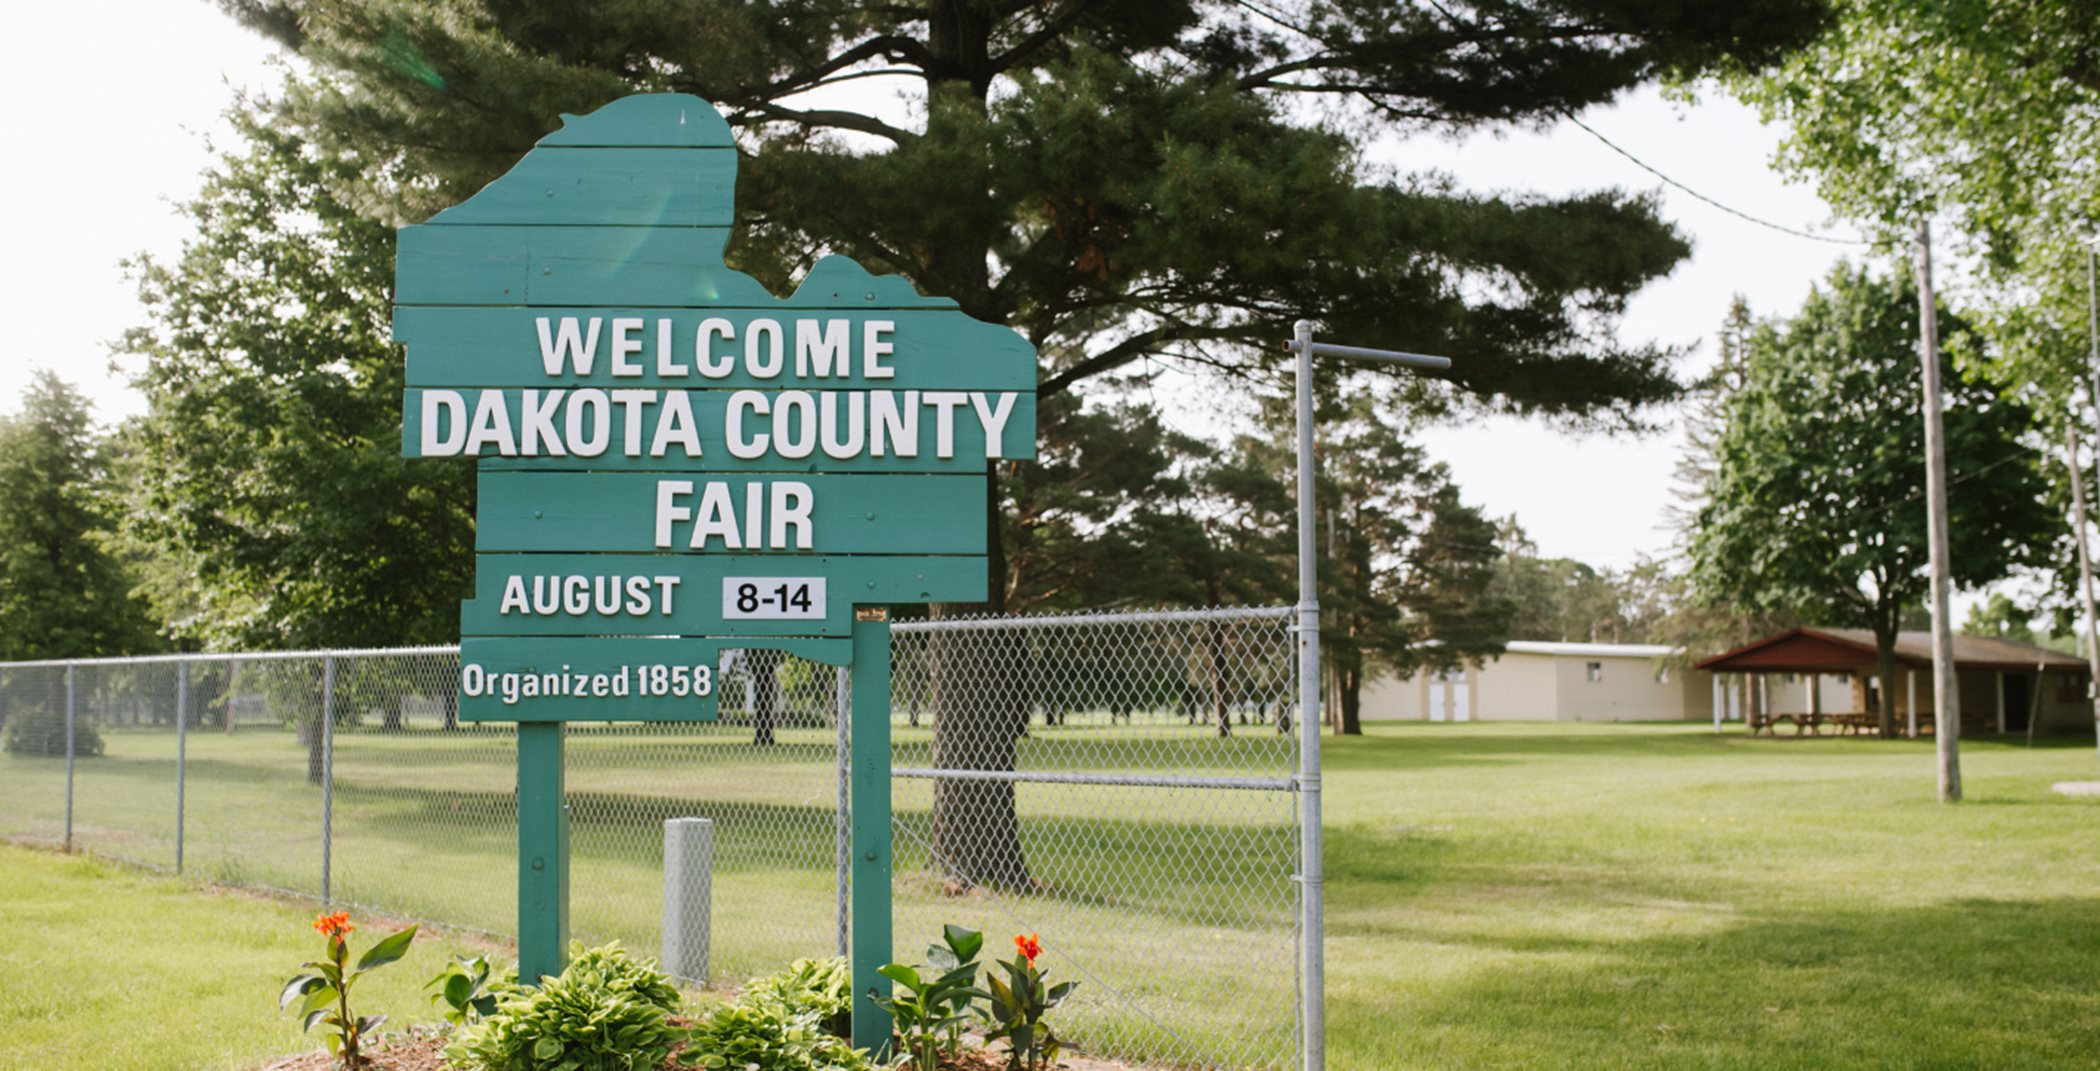 The Dakota County Fair